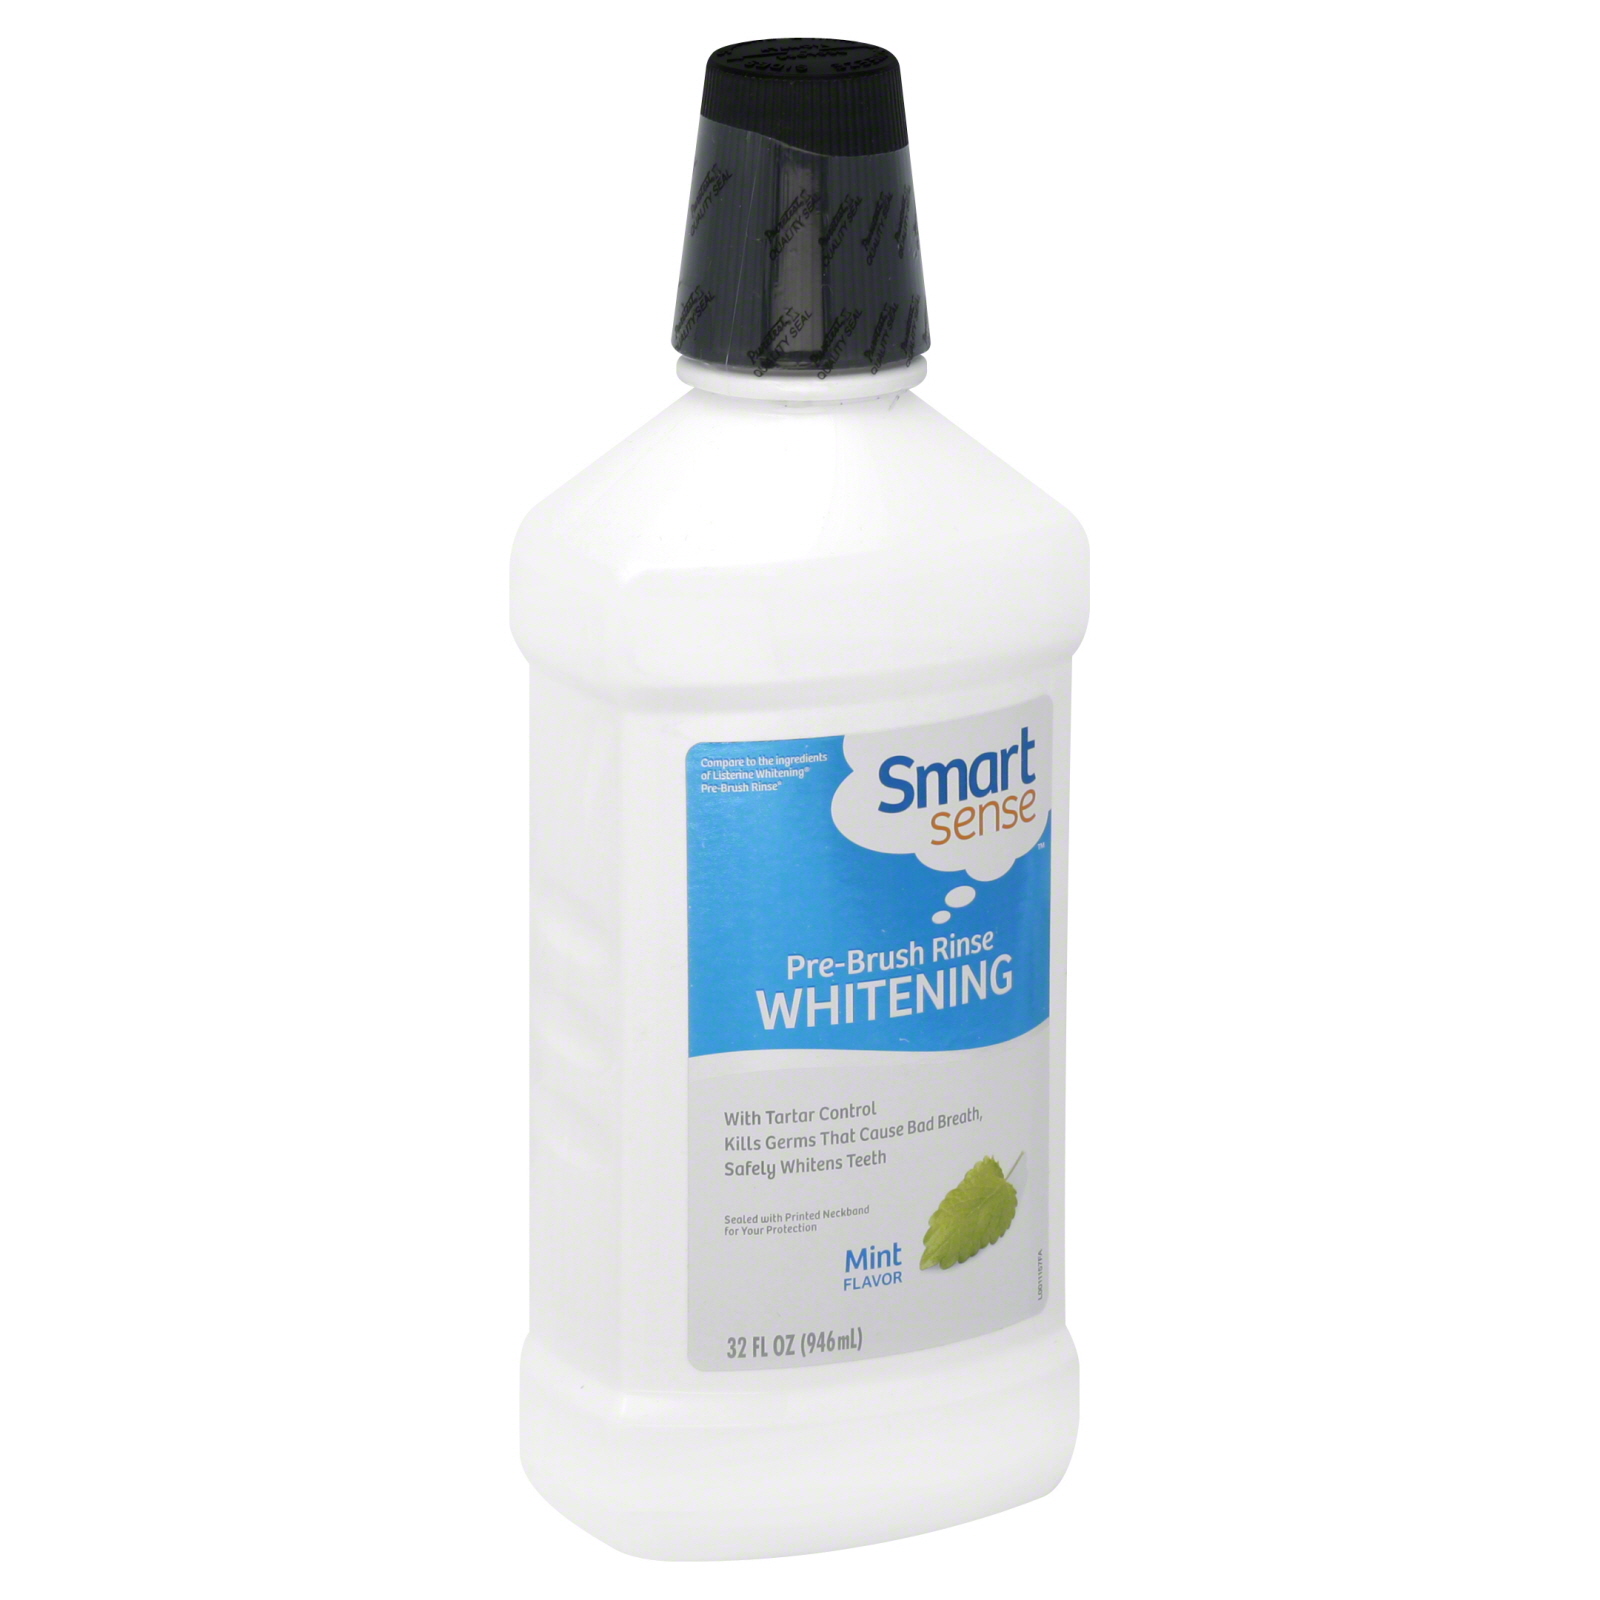 Smart Sense Pre-Brush Rinse, Whitening, Mint Flavor 32 fl oz (946 ml)